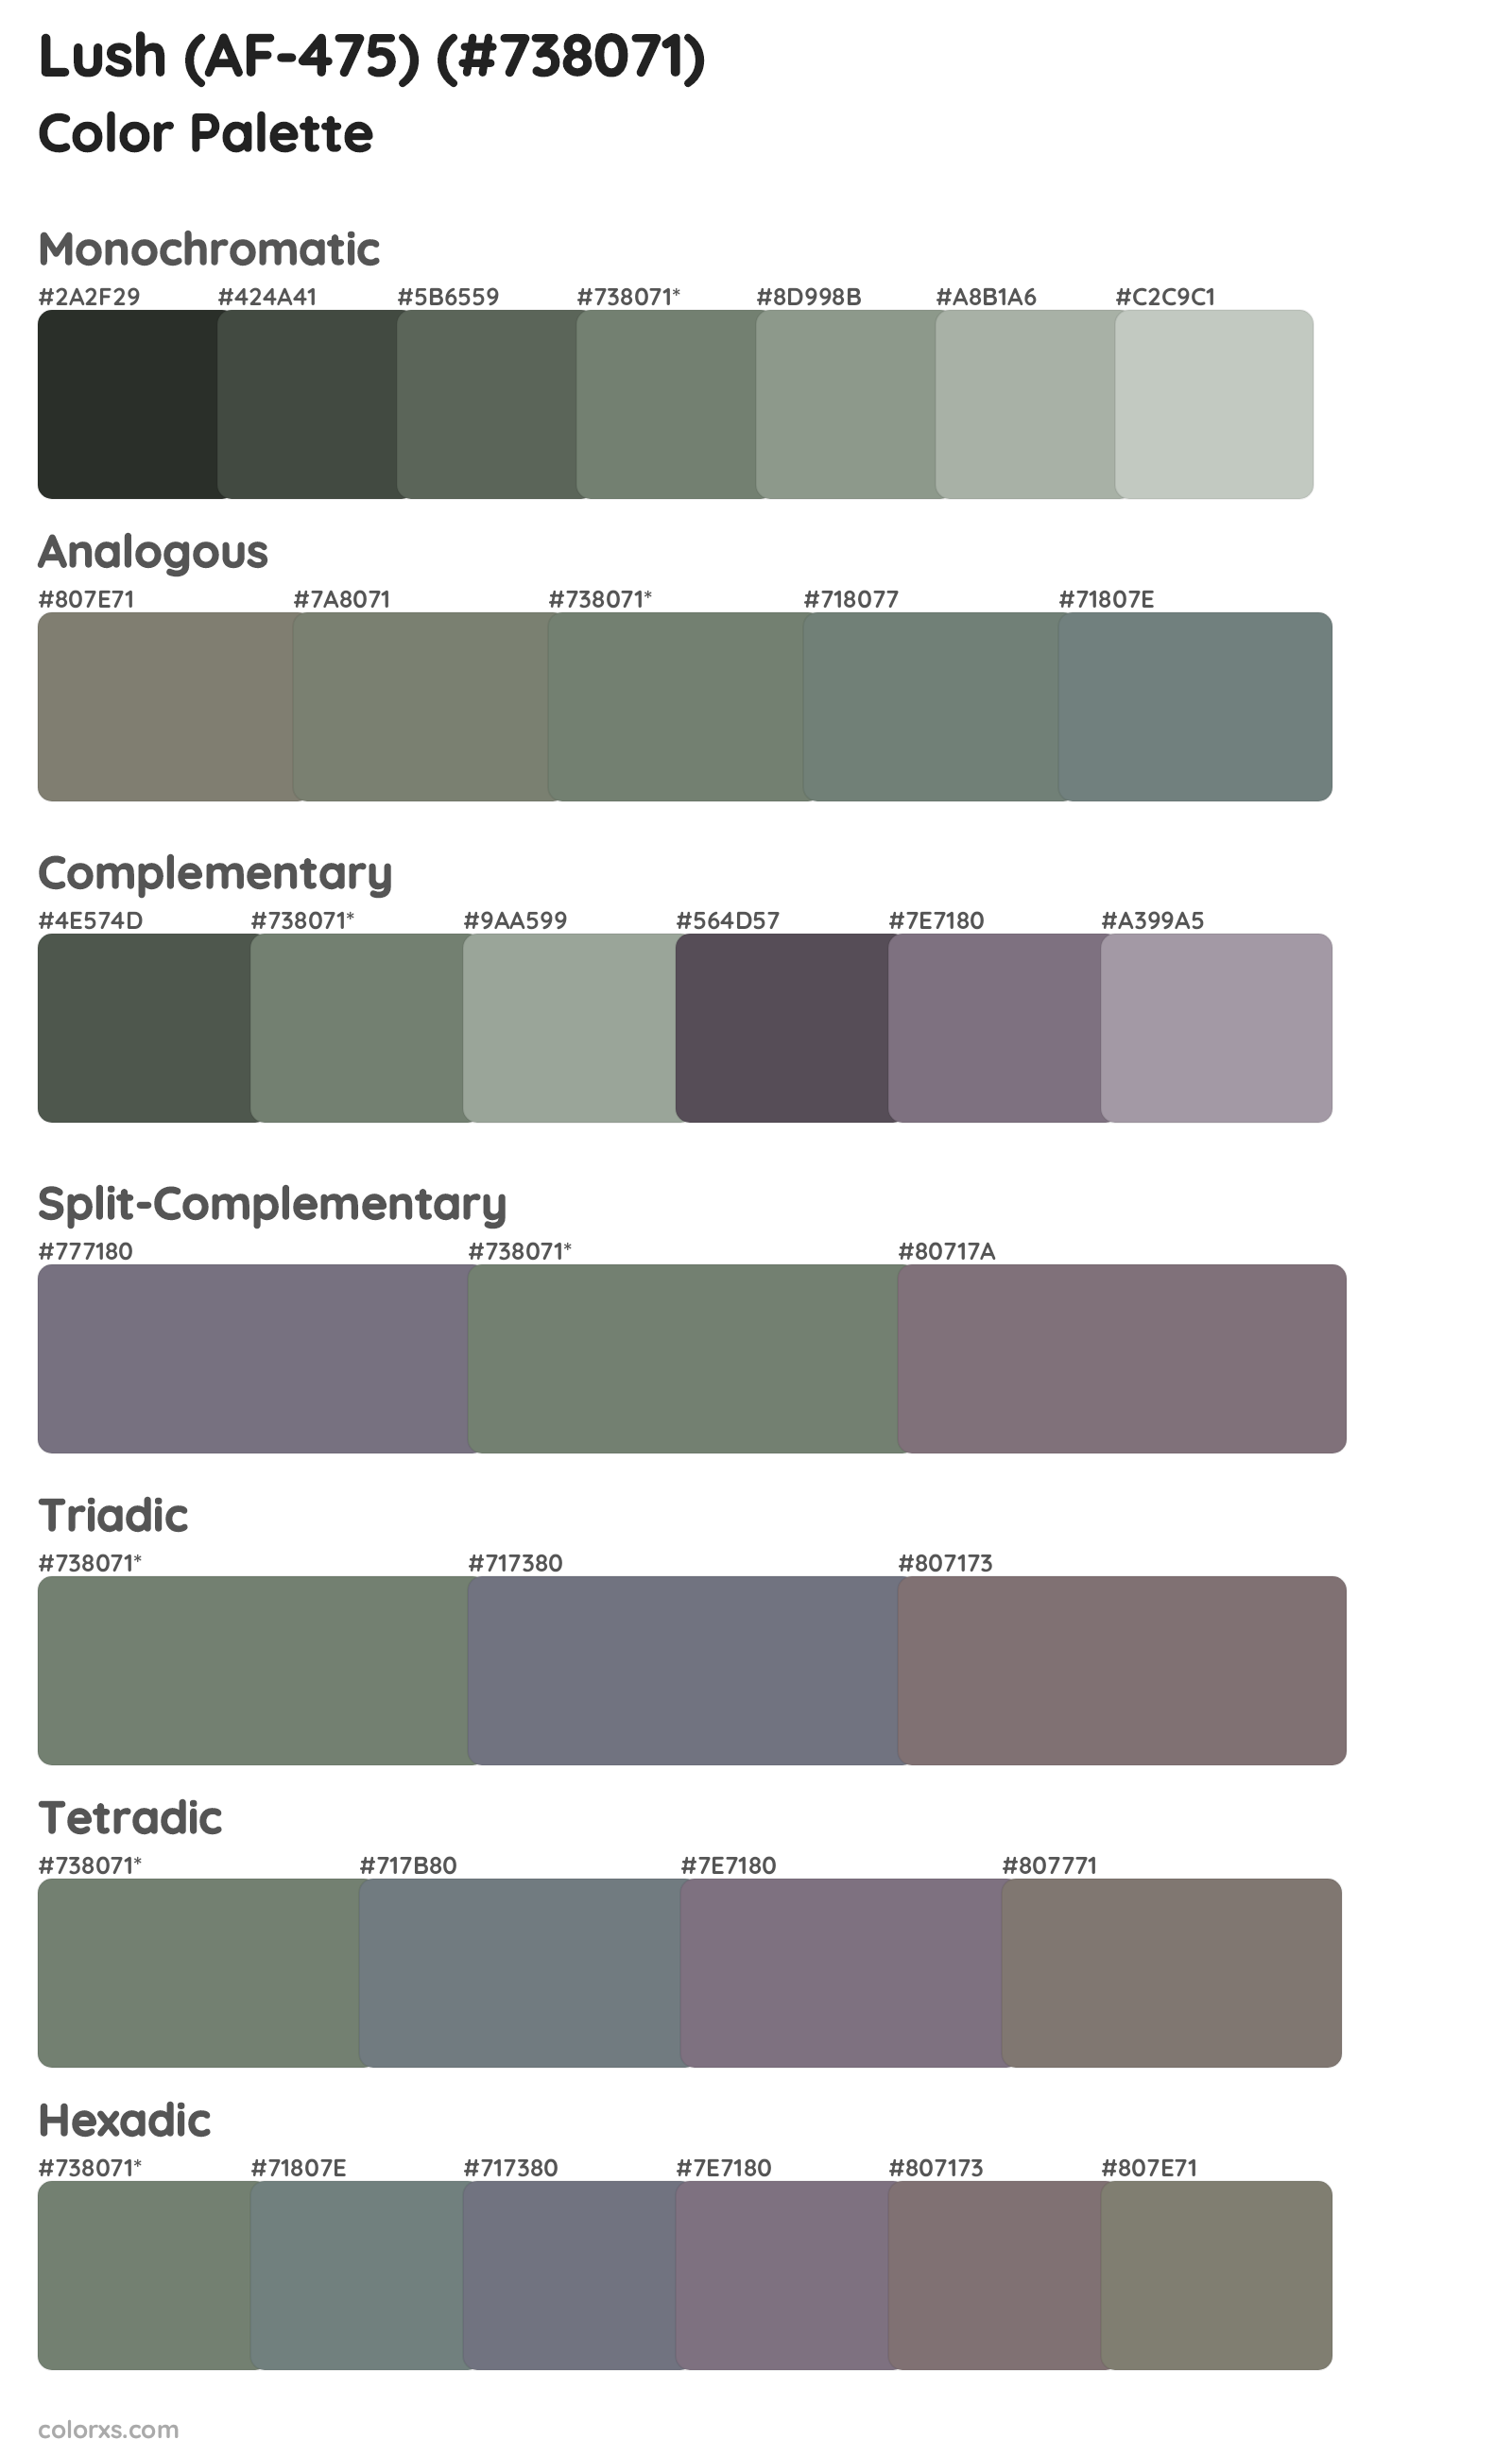 Lush (AF-475) Color Scheme Palettes